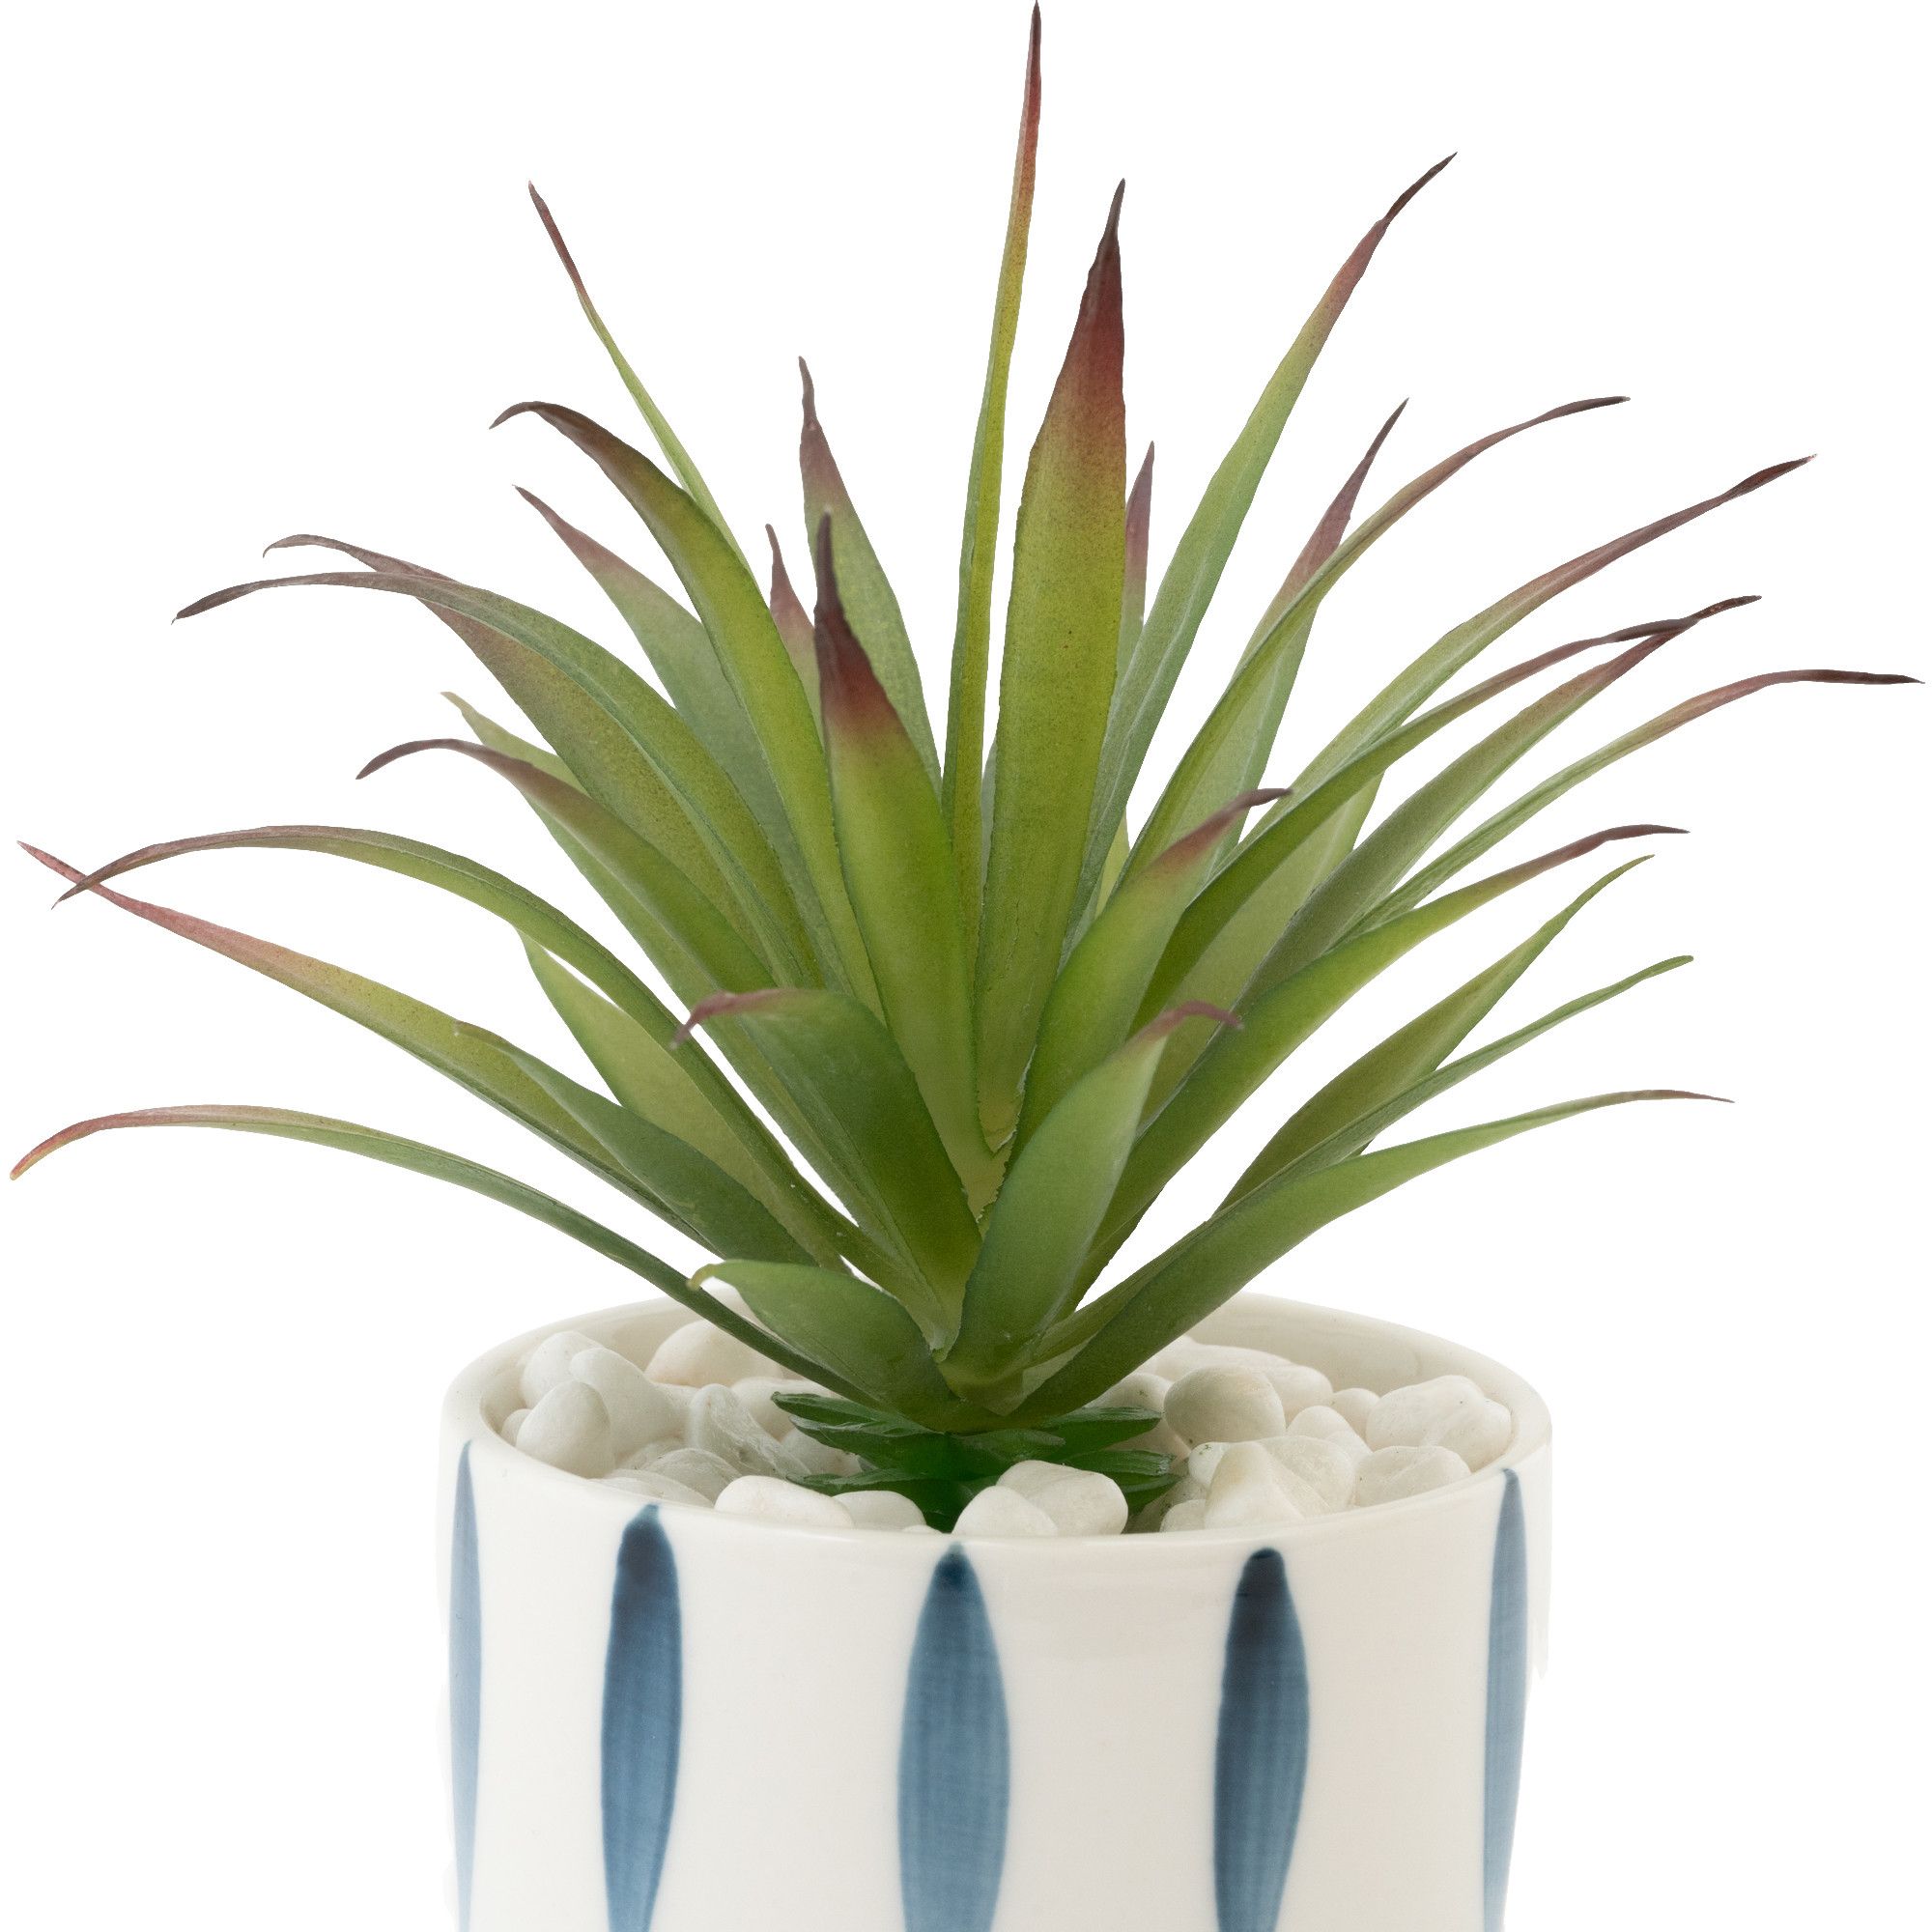 18cm Aloe succulent Artificial plant in Blue & white Ceramic Pot